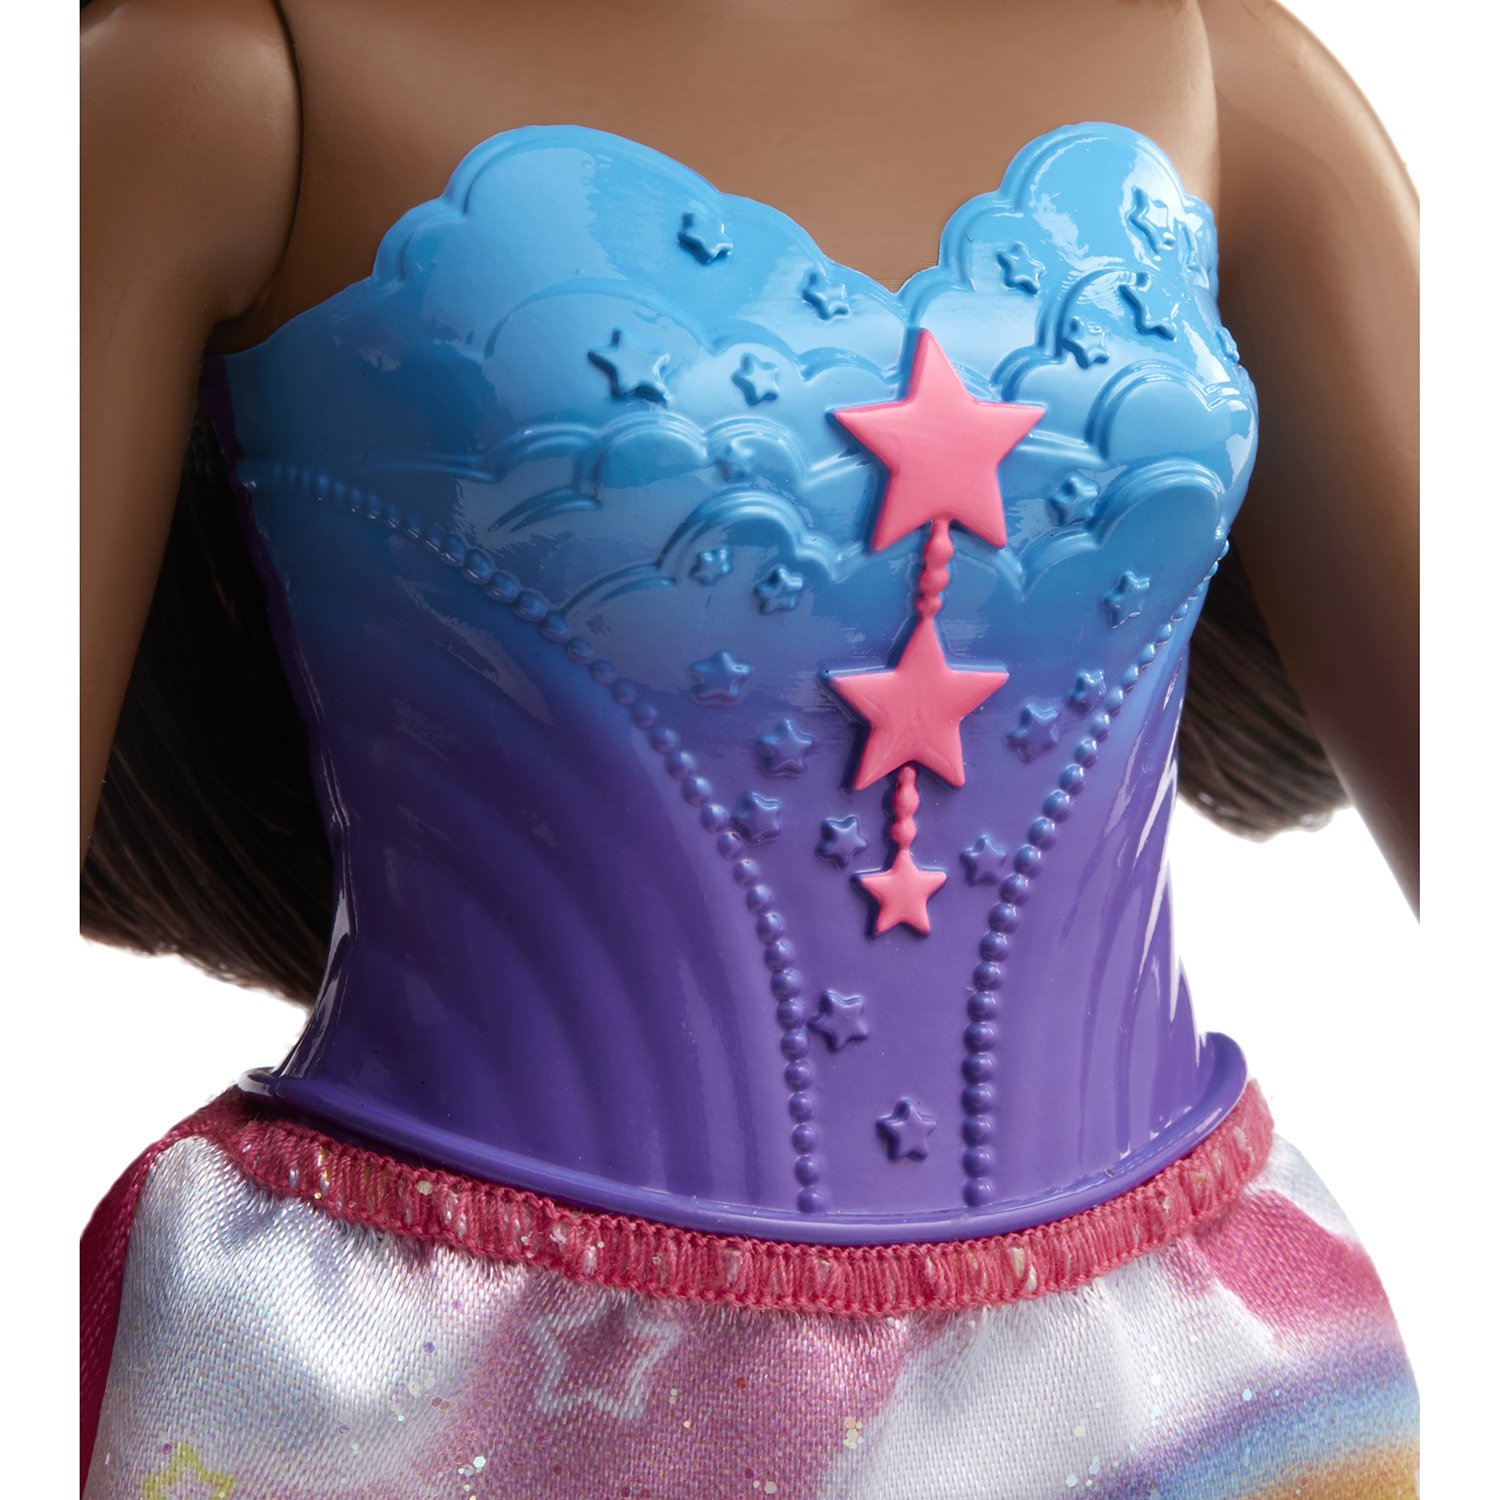 Кукла Barbie Дримтопия Волшебная Принцесса, FJC98